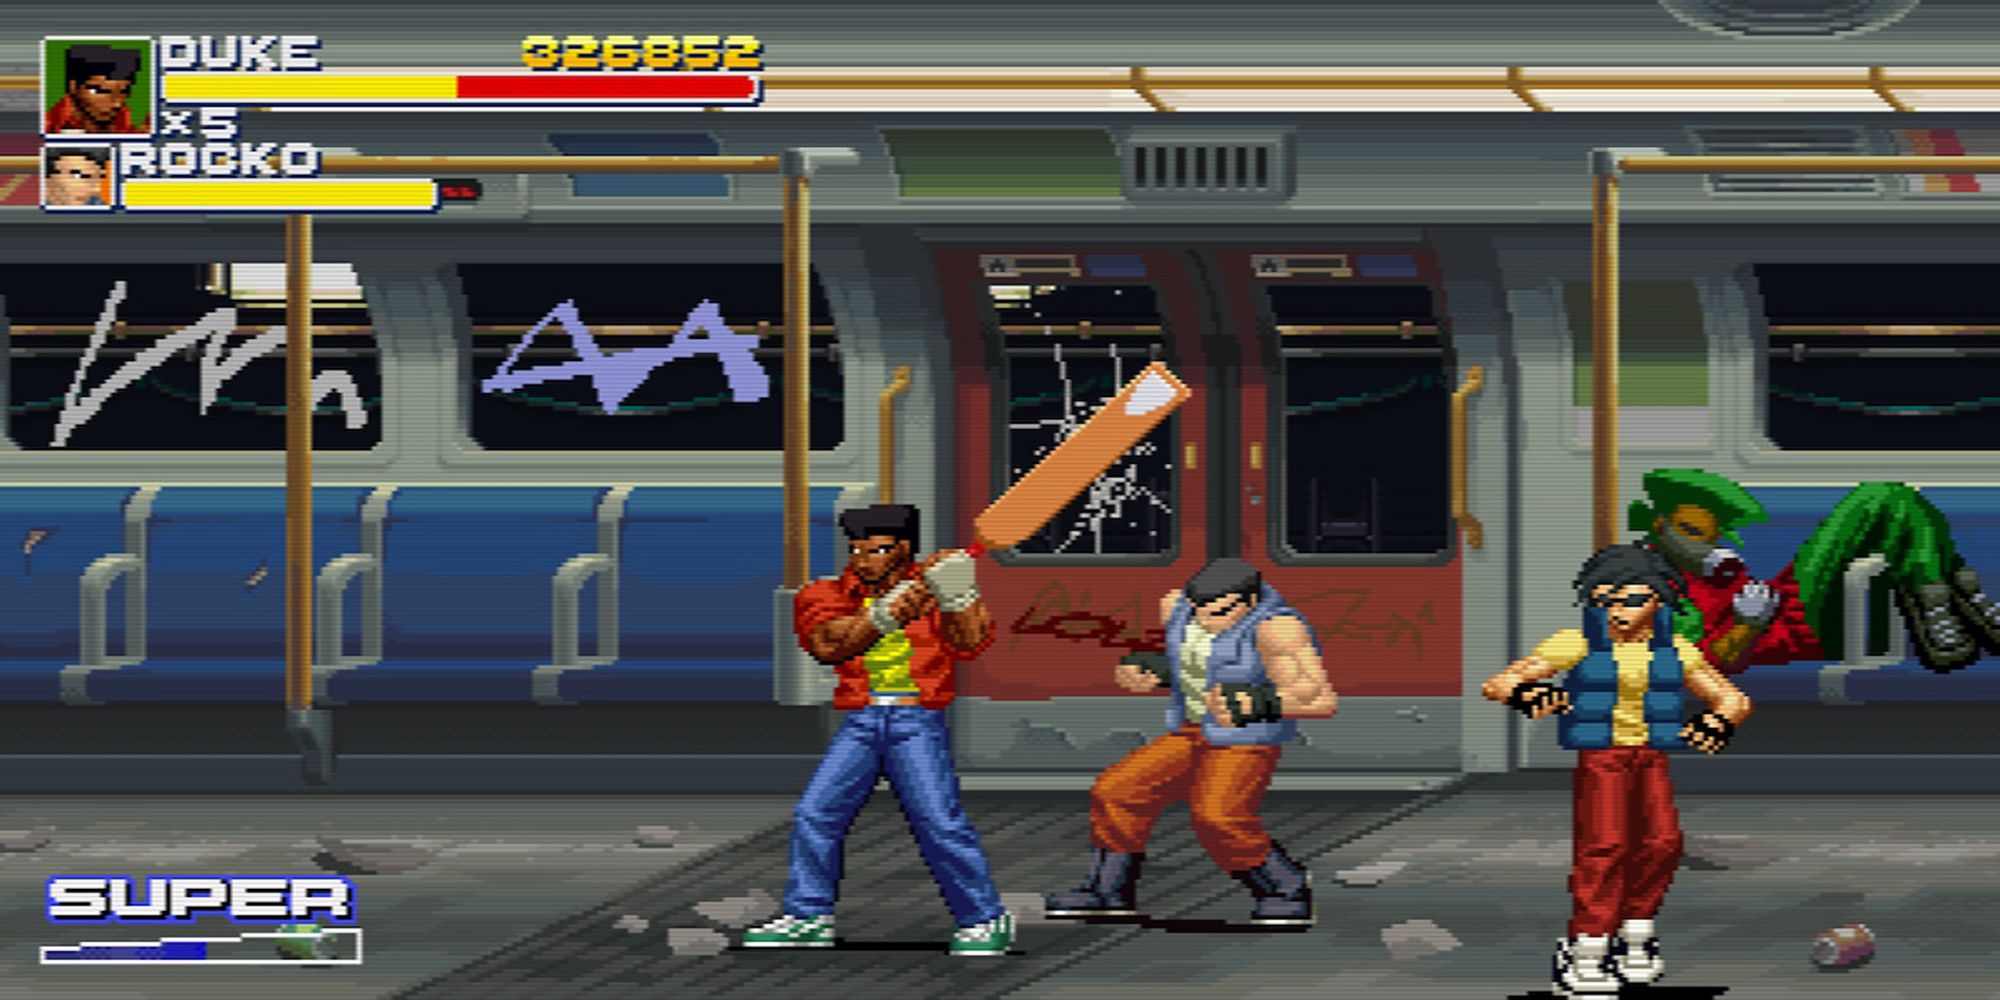 Duke wields a giant paddle in a battle on a subway car in Final Vendetta.